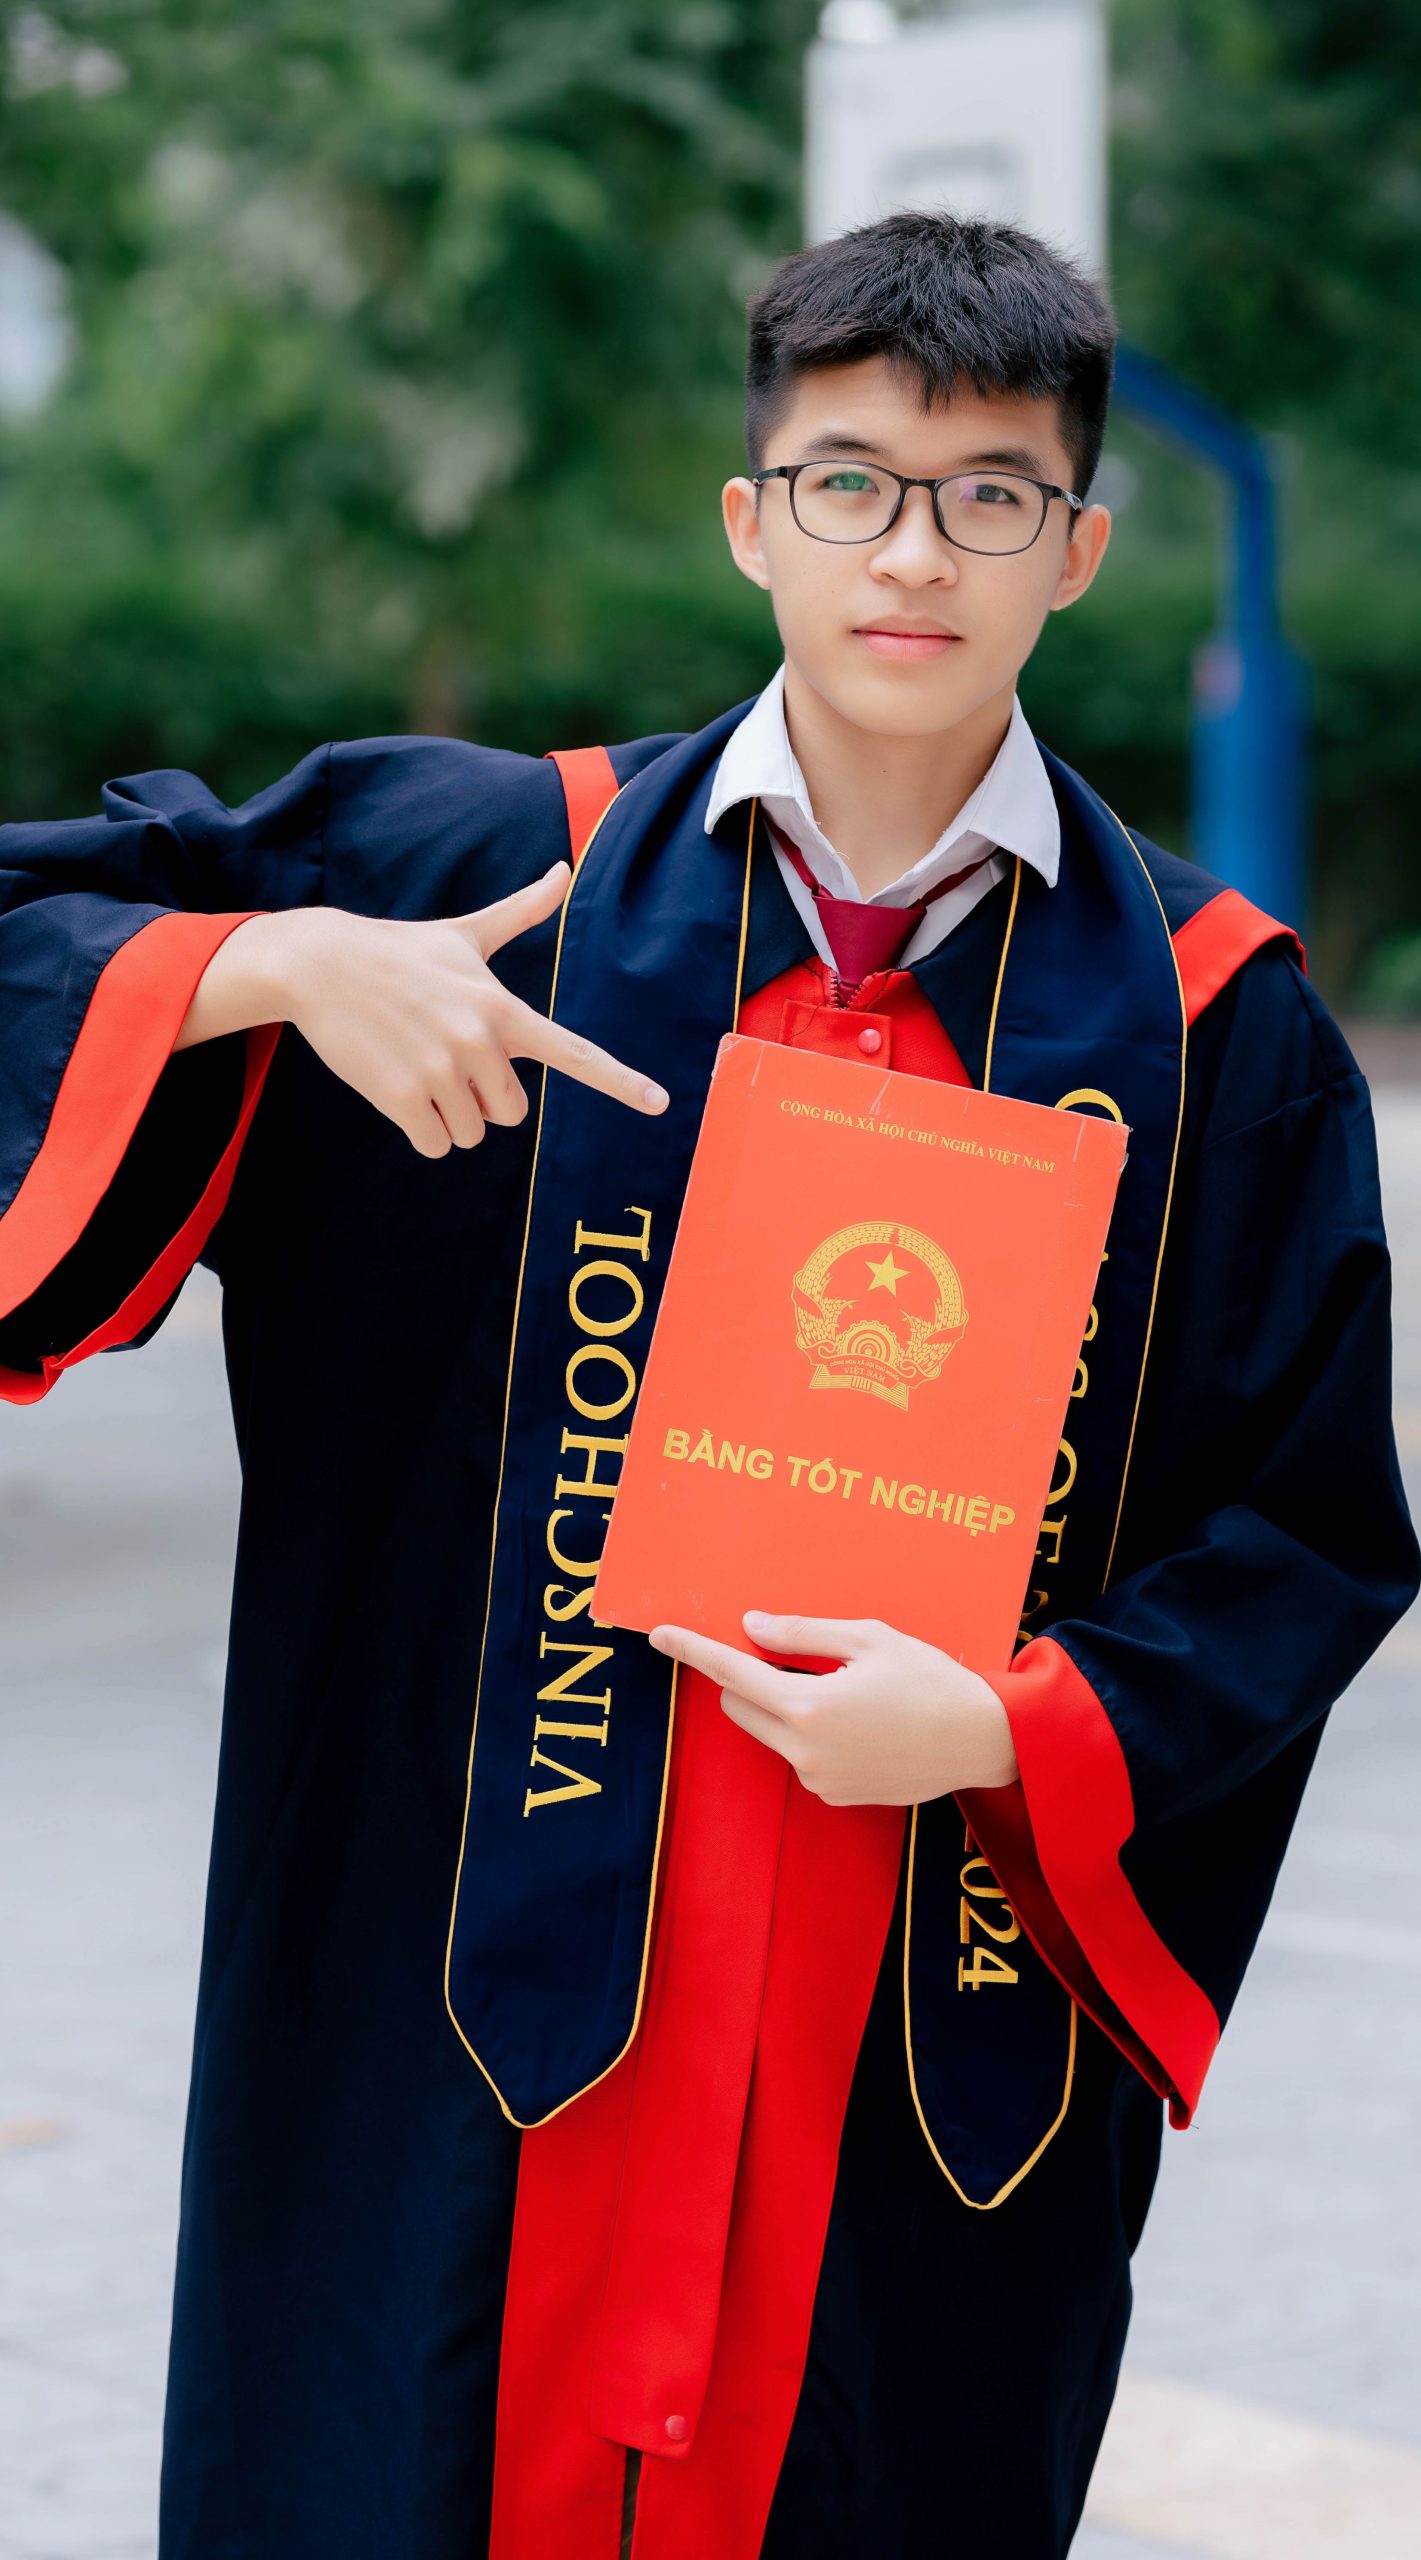 Nguyễn Nam Nguyên – A Vinser Passionate about Entrepreneurship Secures 4 Scholarships Worth 12 Billion VND from 4 Prestigious U.S. Universities